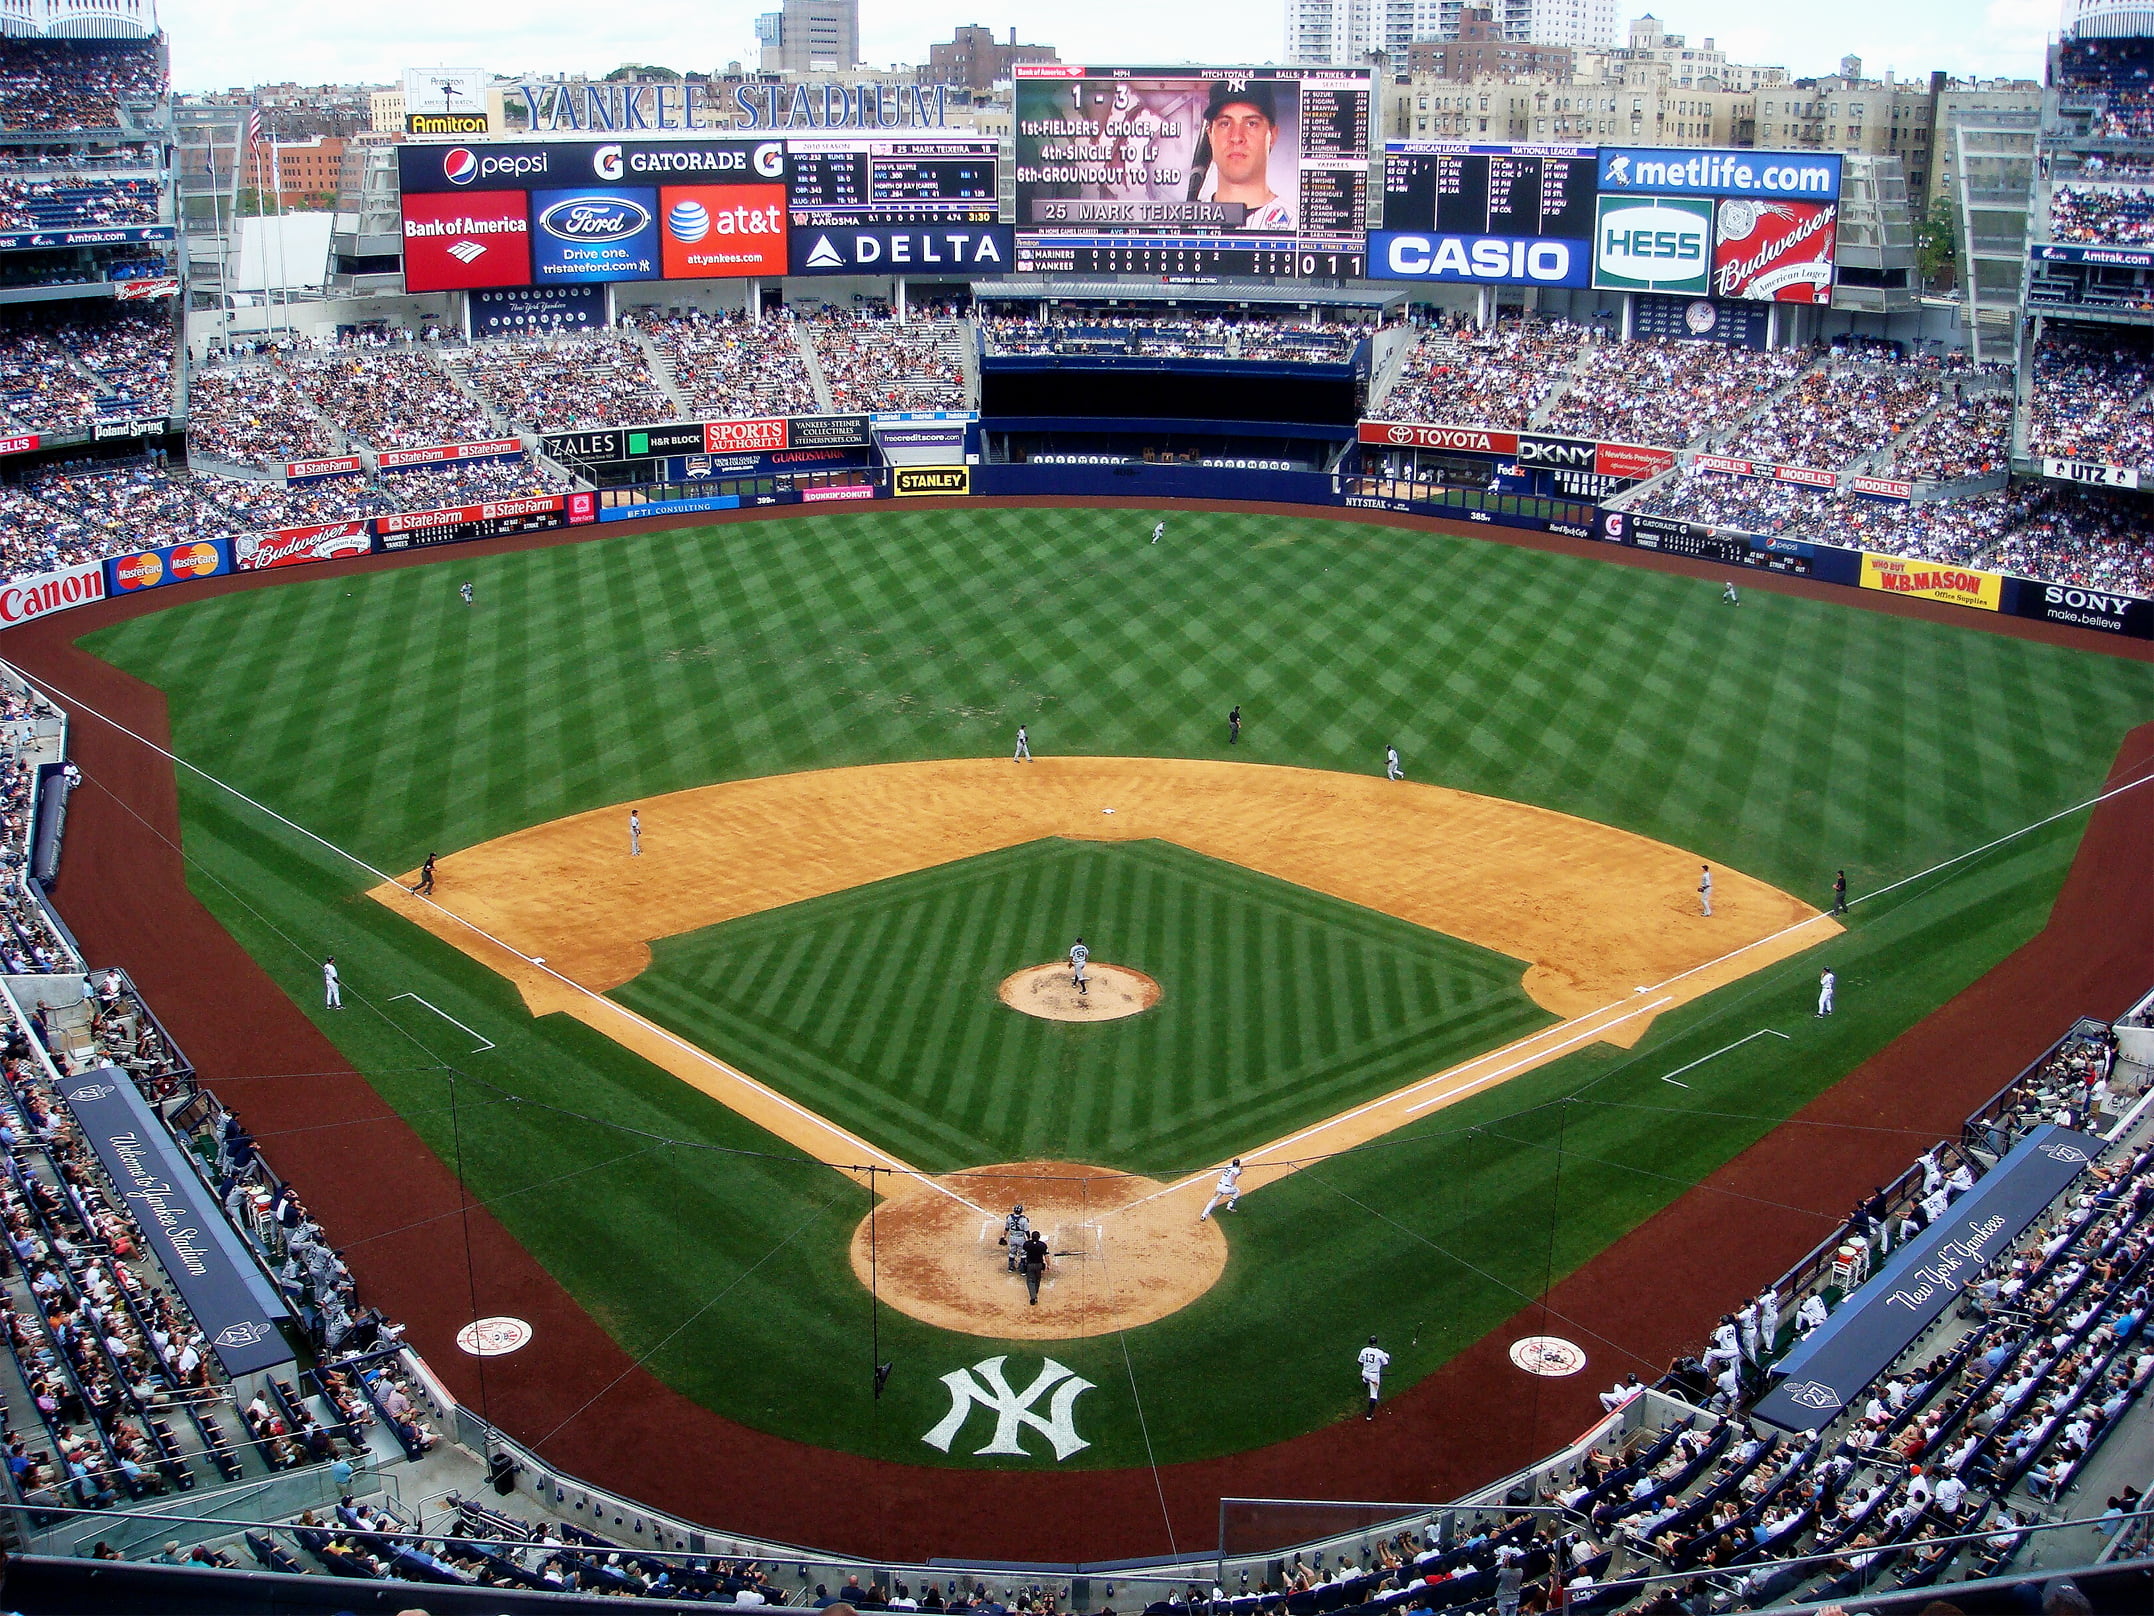 New York Yankees Tickets 2023